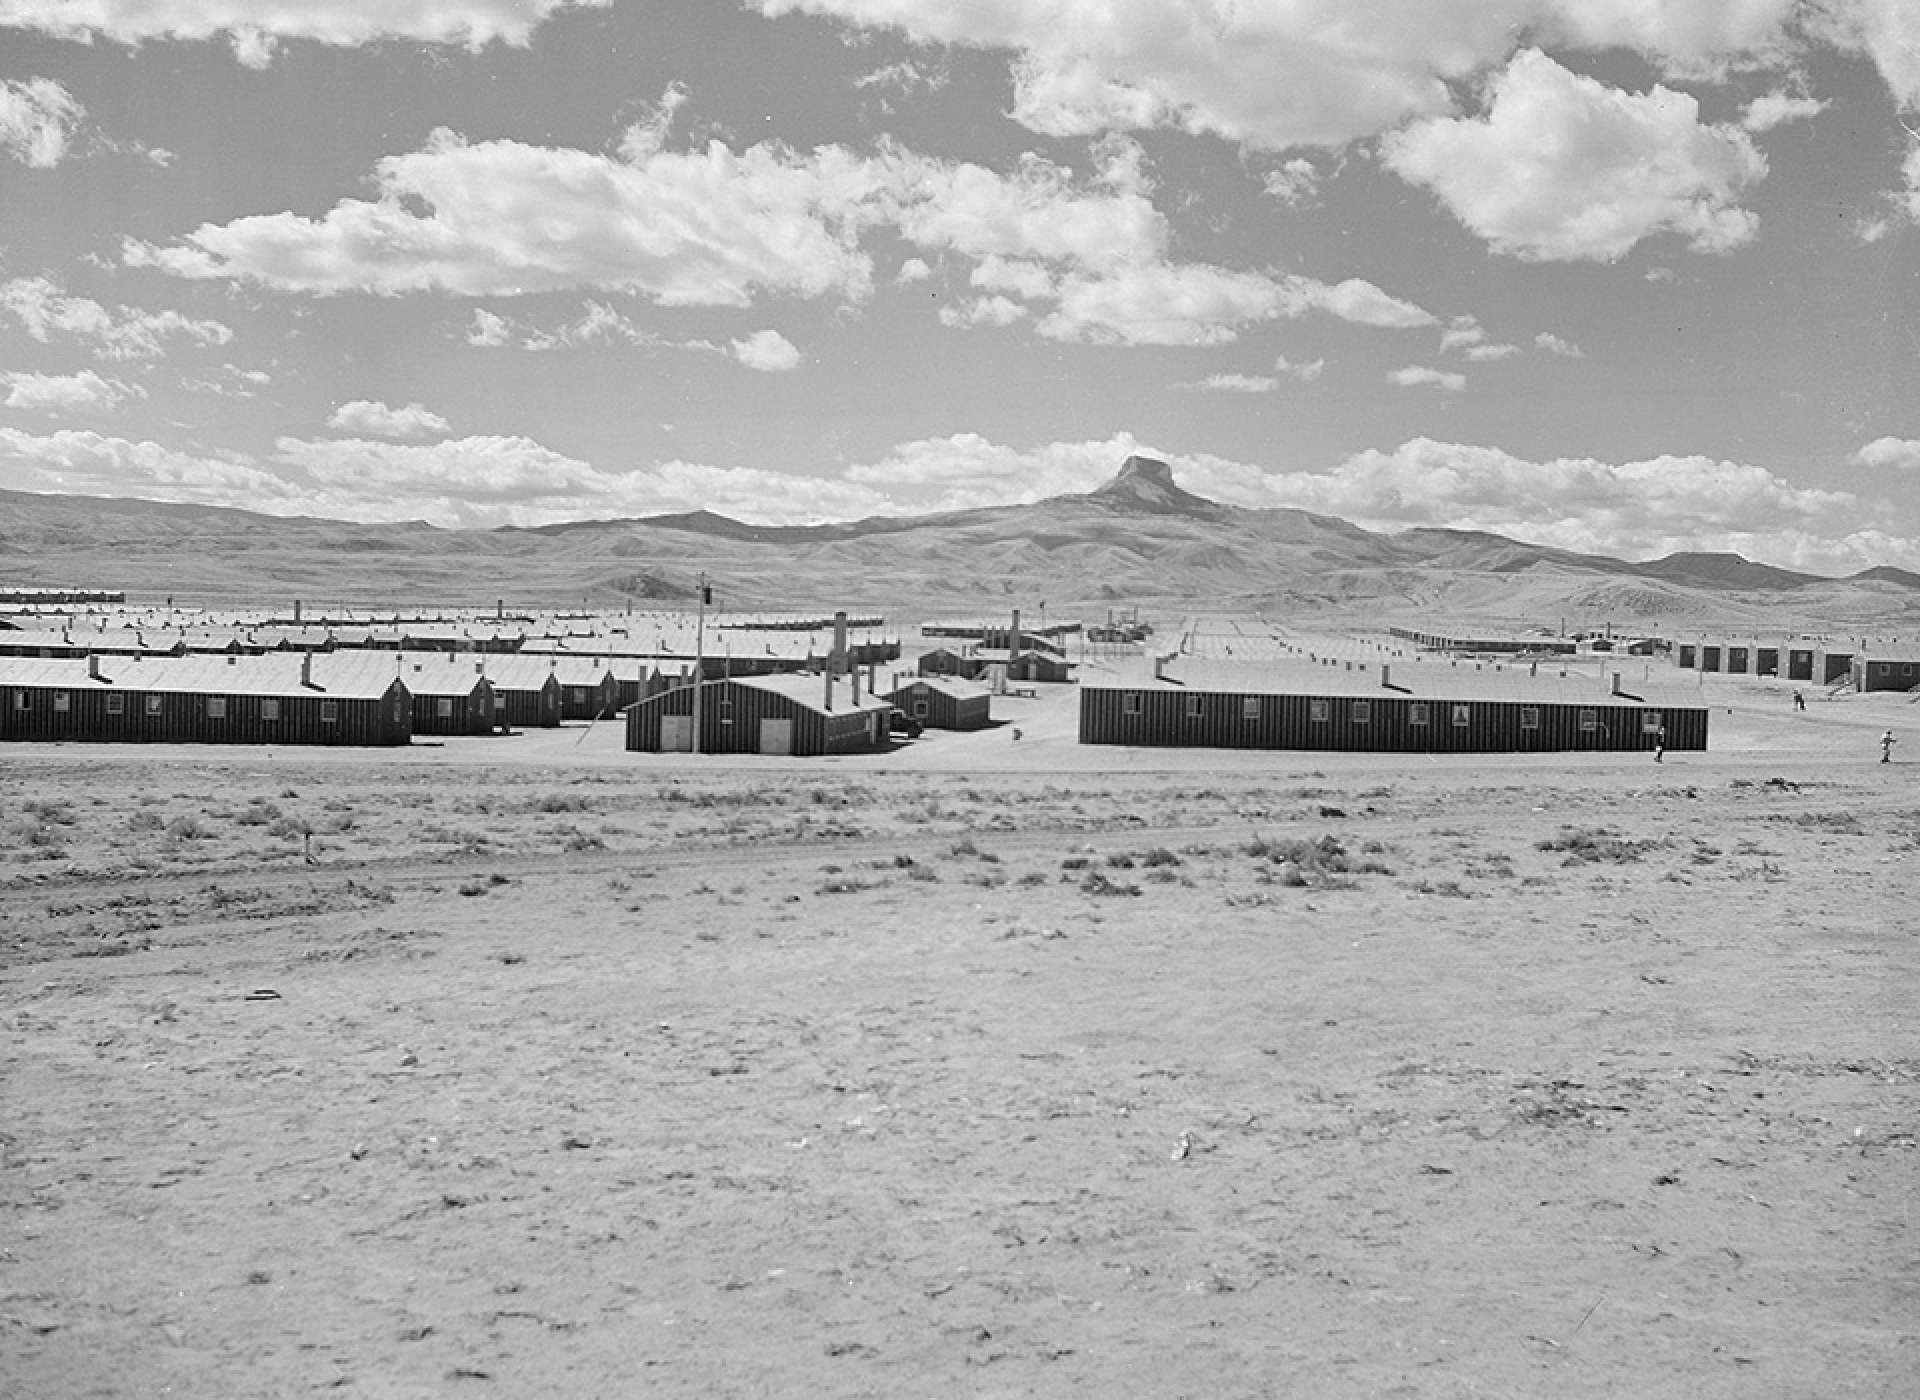 Heart Mountain incarceration camp